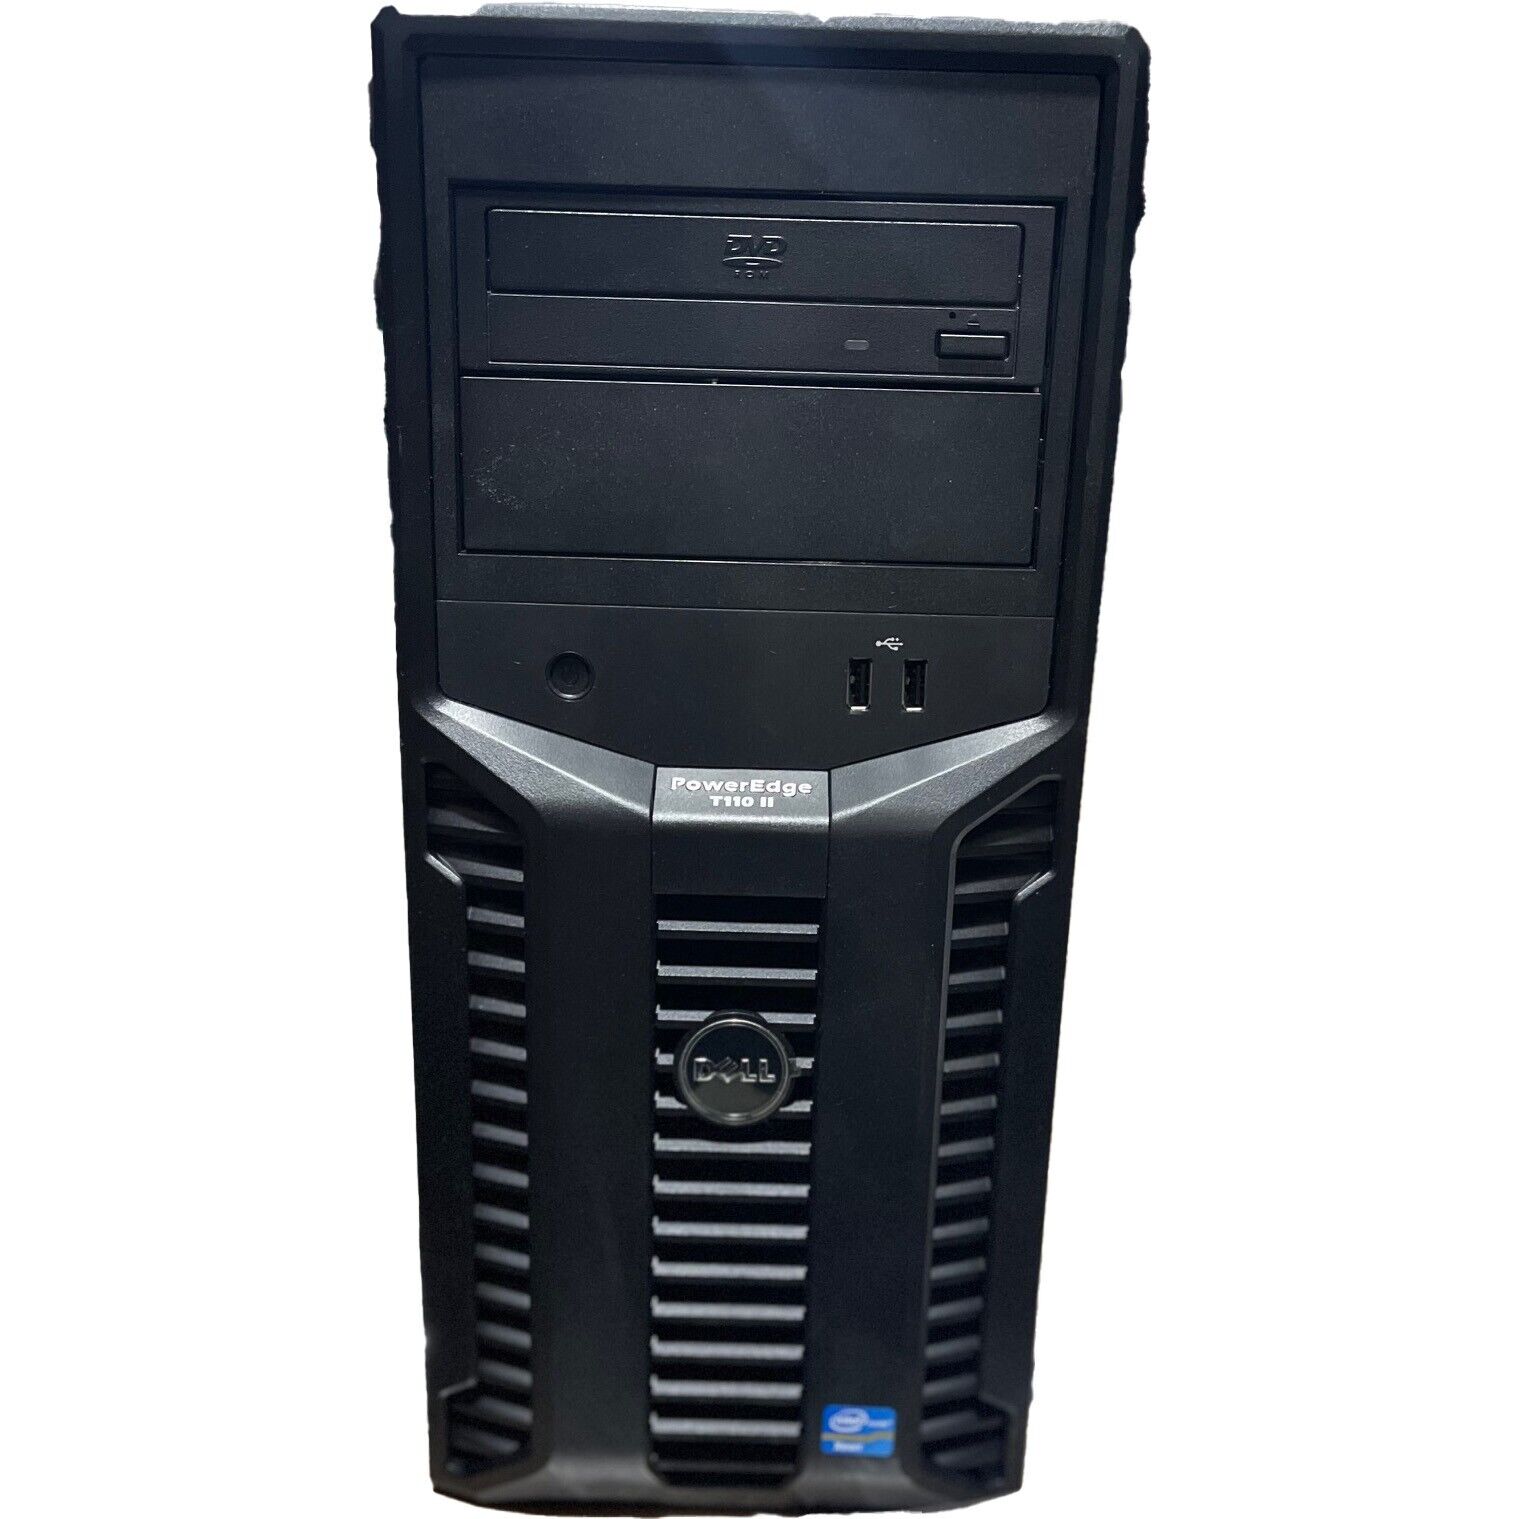 Dell PowerEdge T110 II Server E3-1220v2 @ 3.10GHz, 8GB Ram, 2x500GB HDD's, NO OS